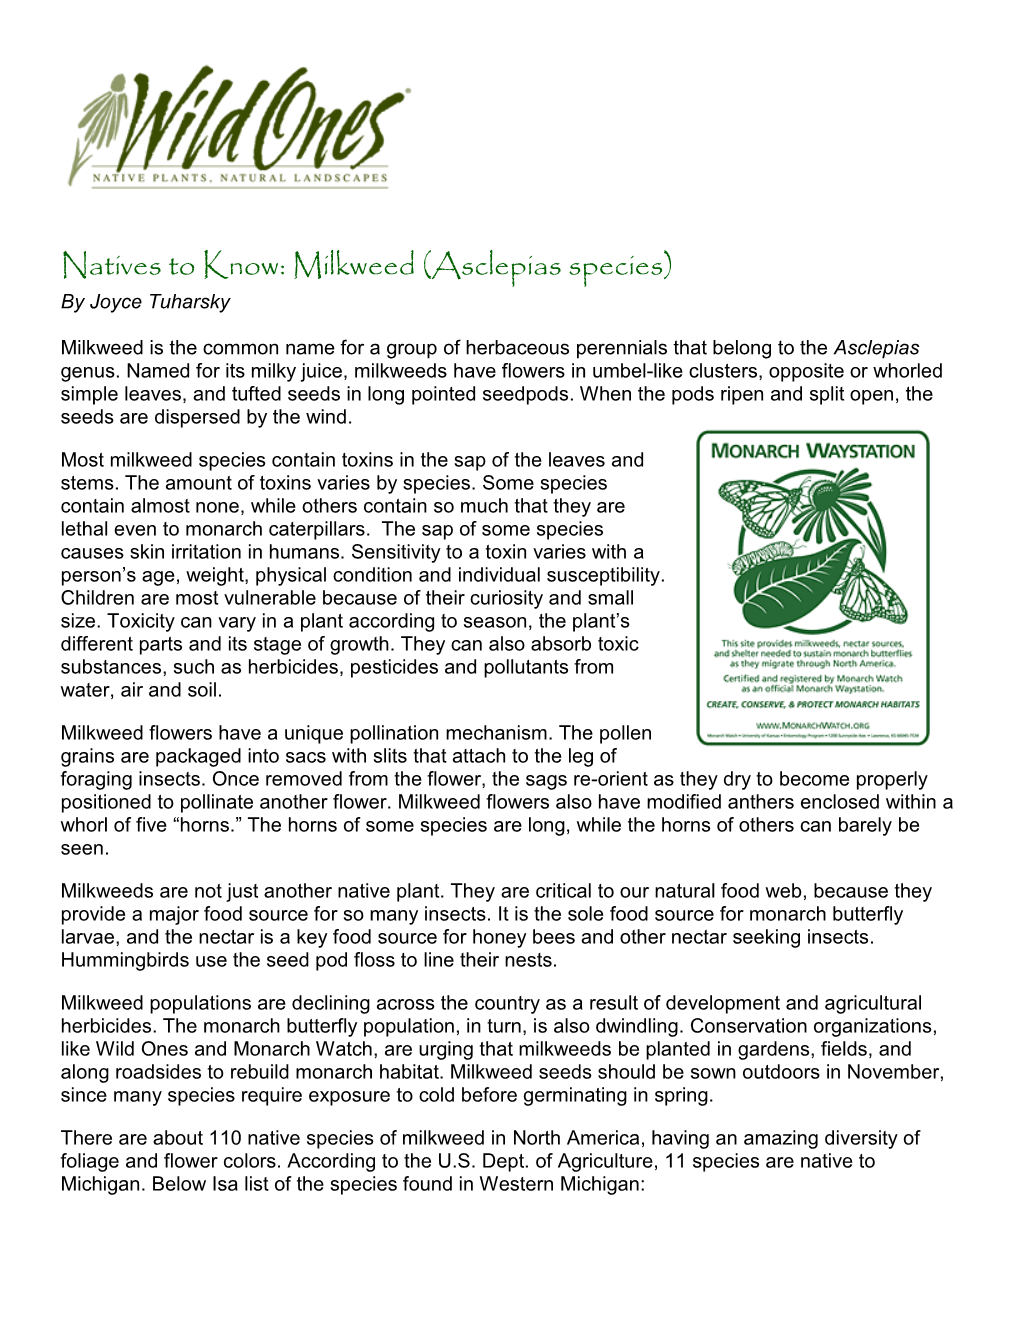 Milkweed (Asclepias Species) by Joyce Tuharsky